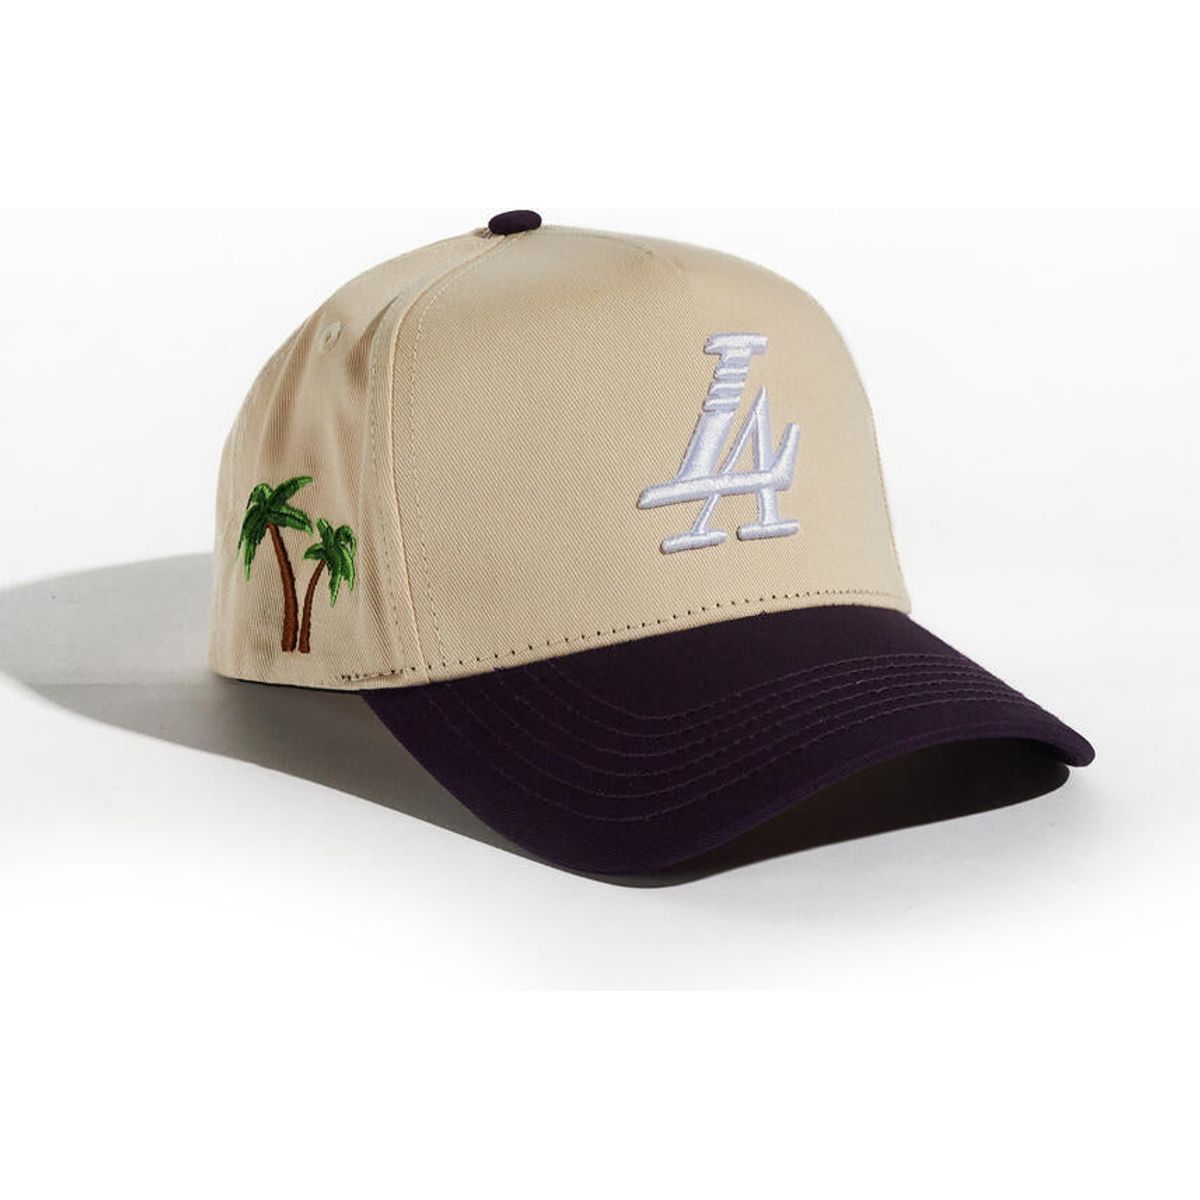 Reference "Paradise LA" Snapback Hat - Cream/Purple